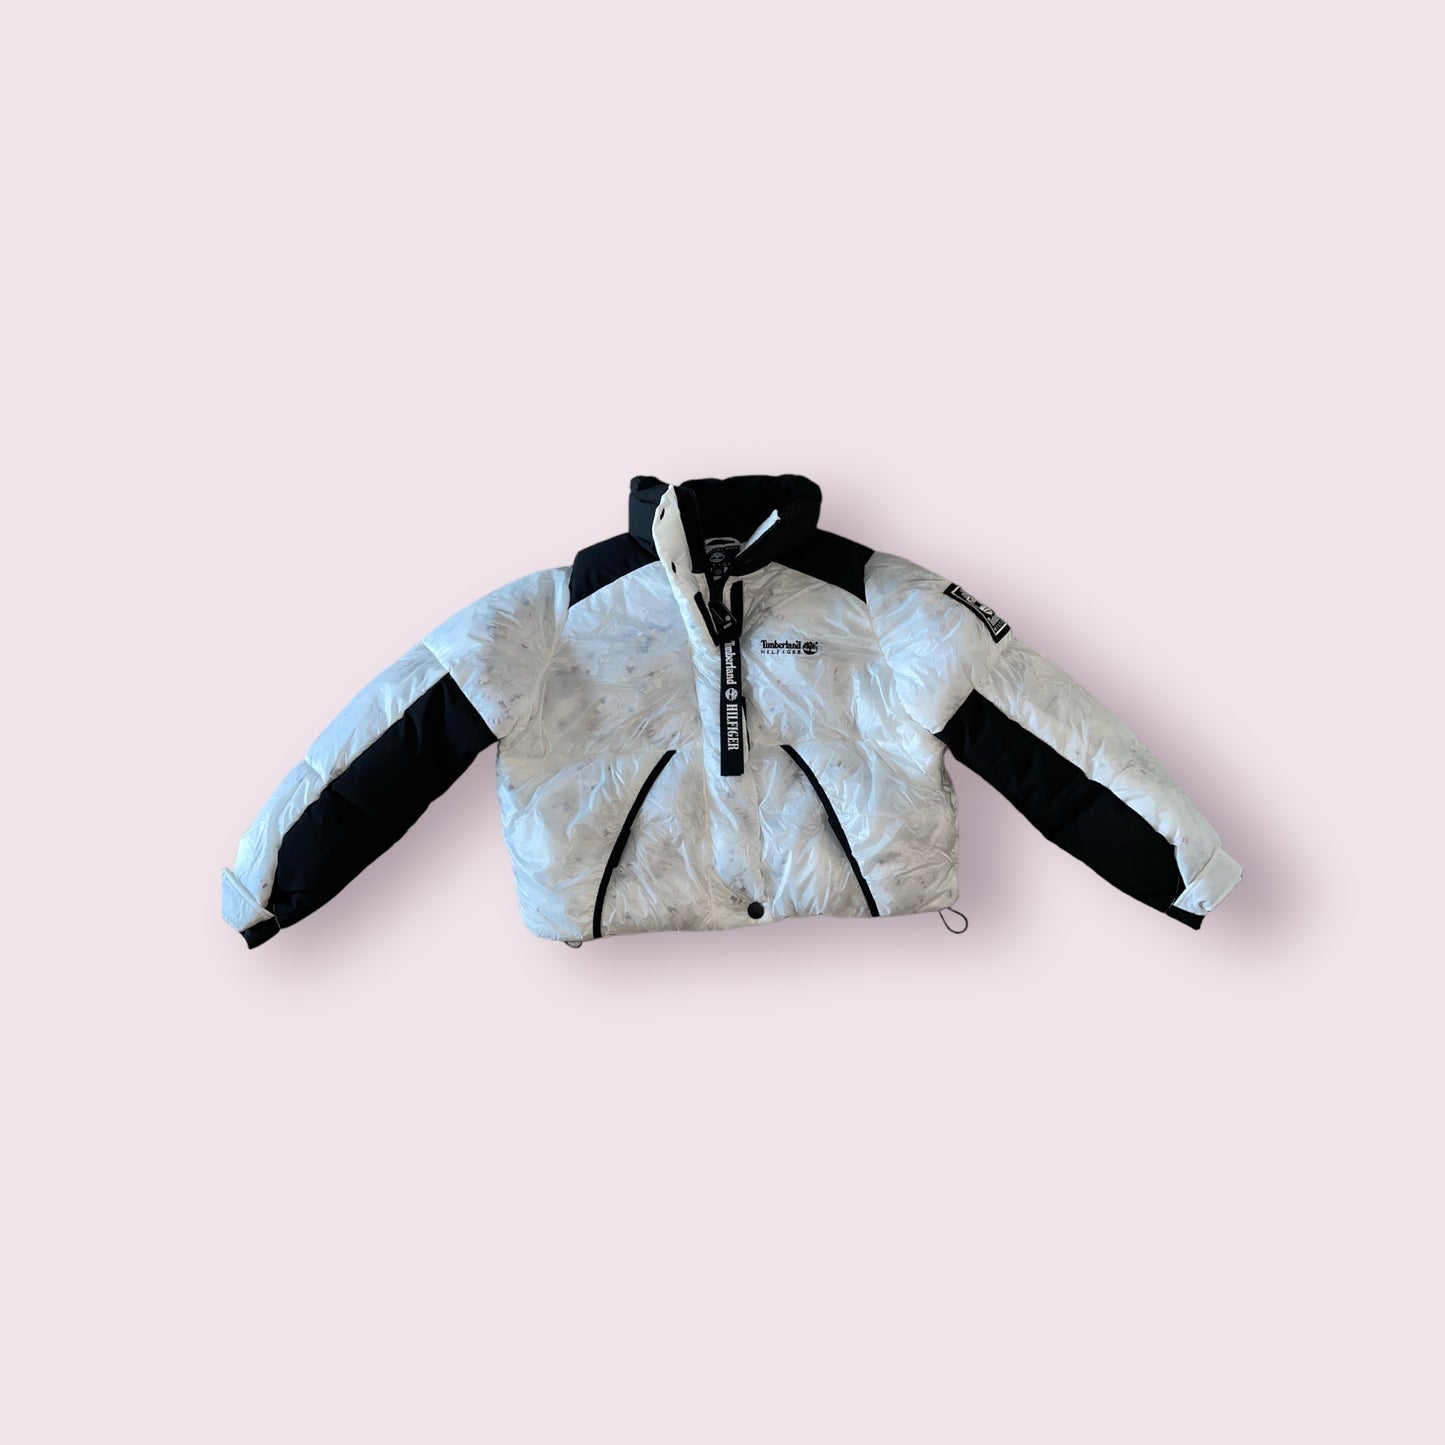 Timberland Hilfiger jacket